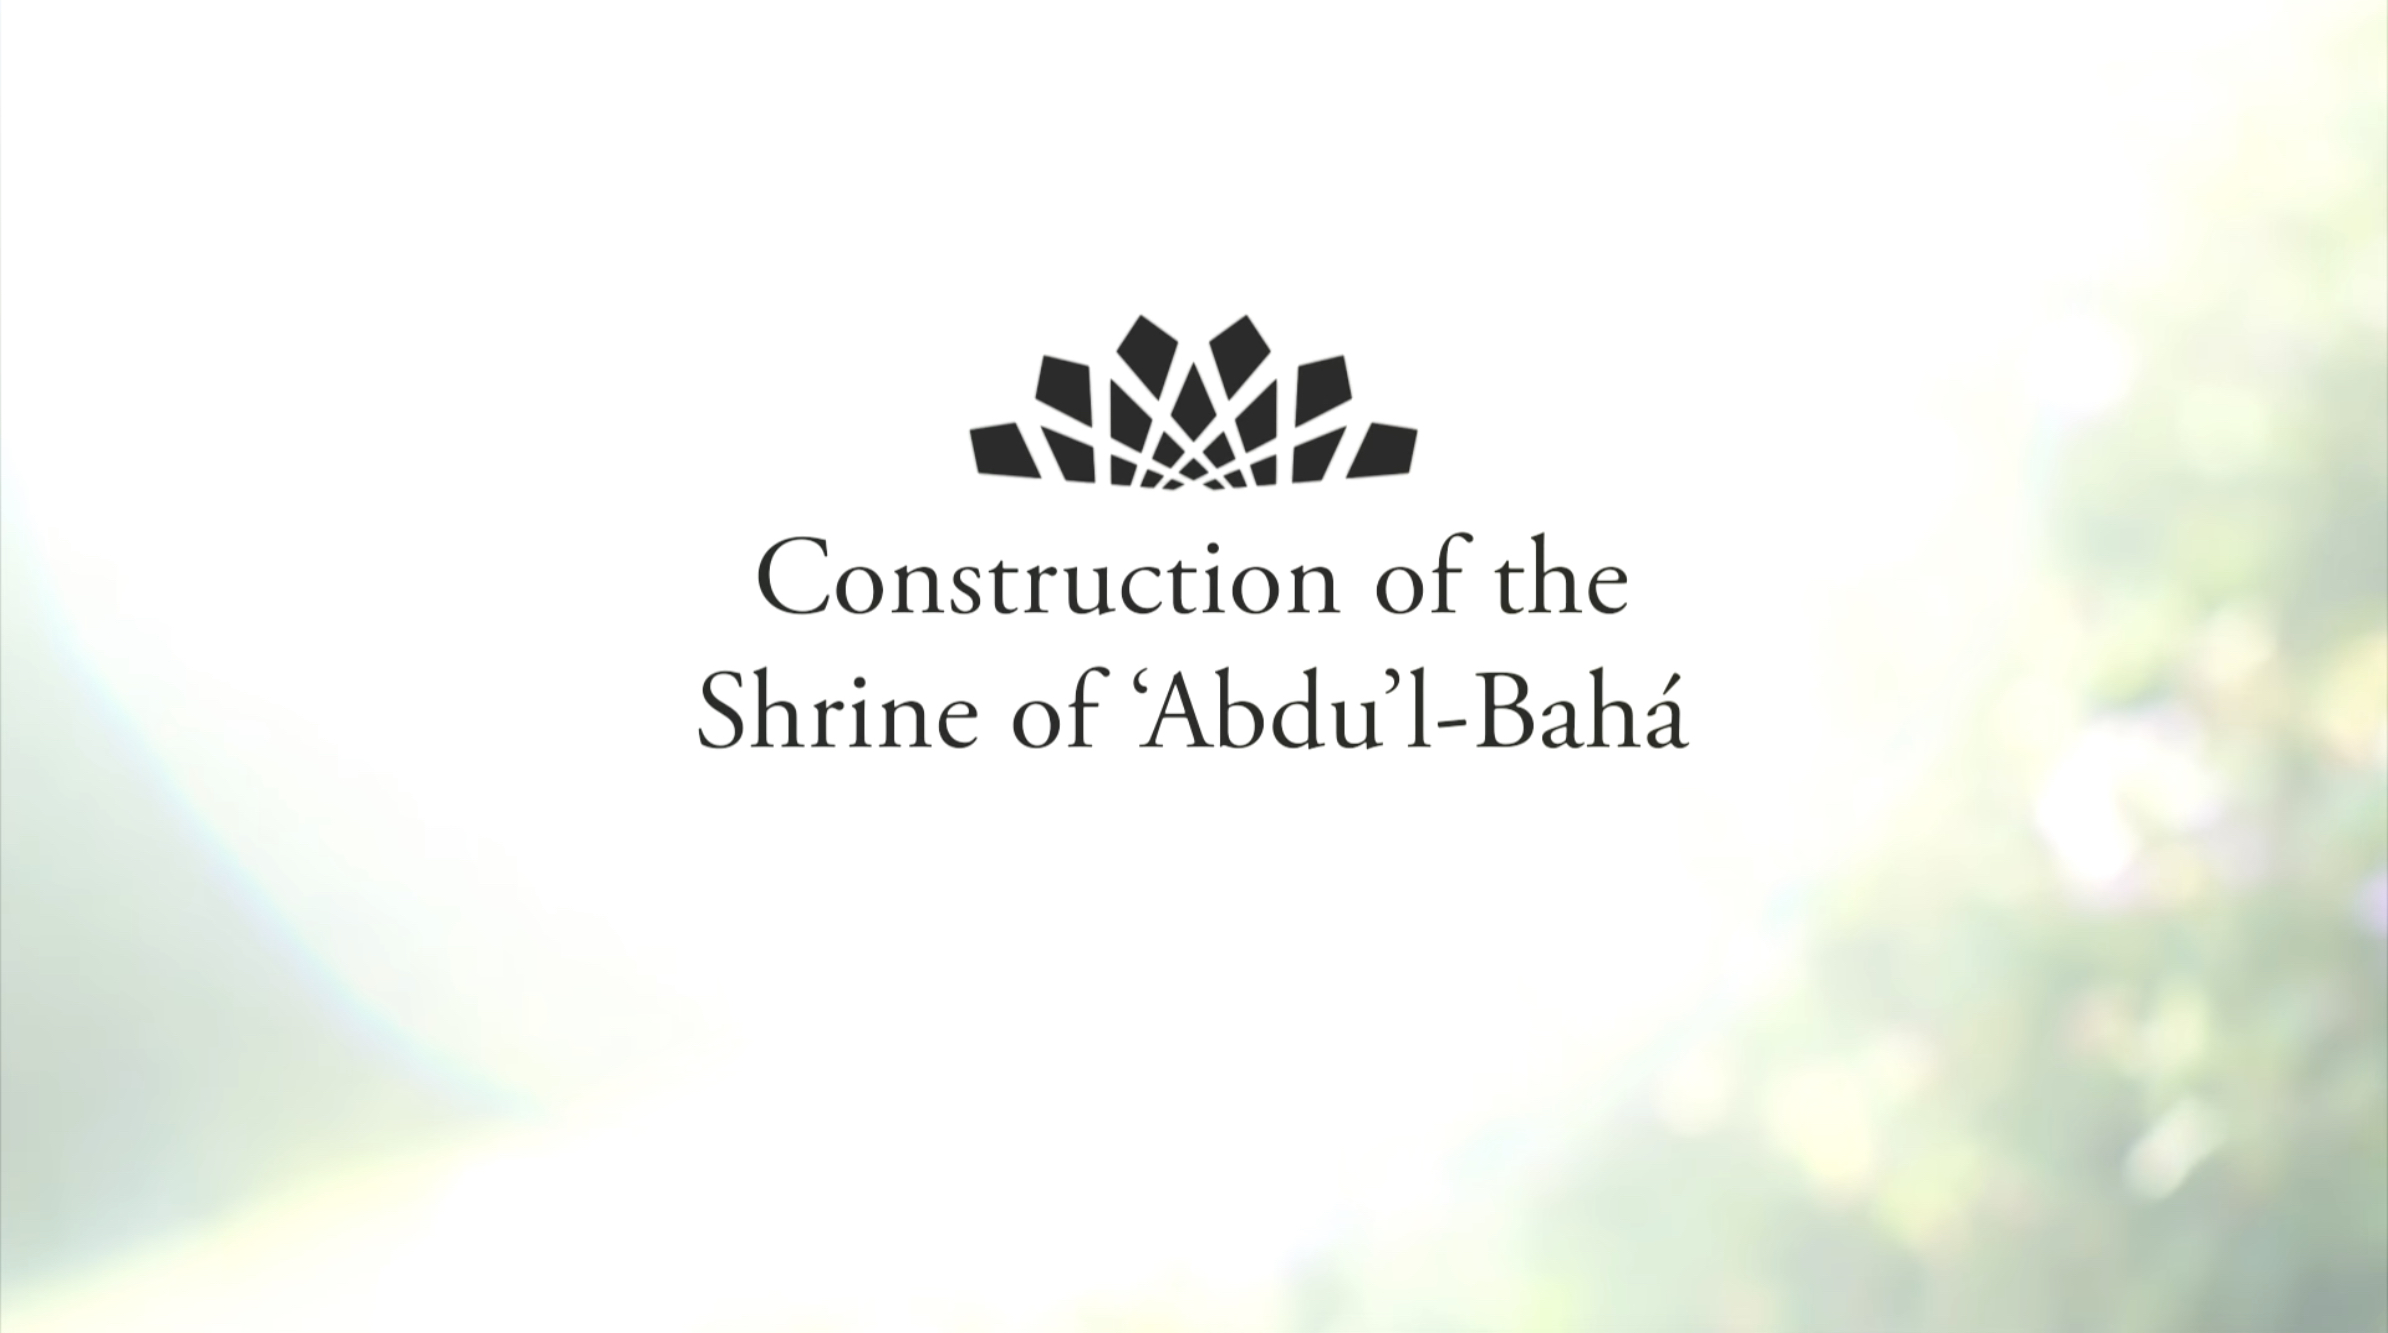 Short Documentary on the construction of the Shrine of Abdu’l-Baha